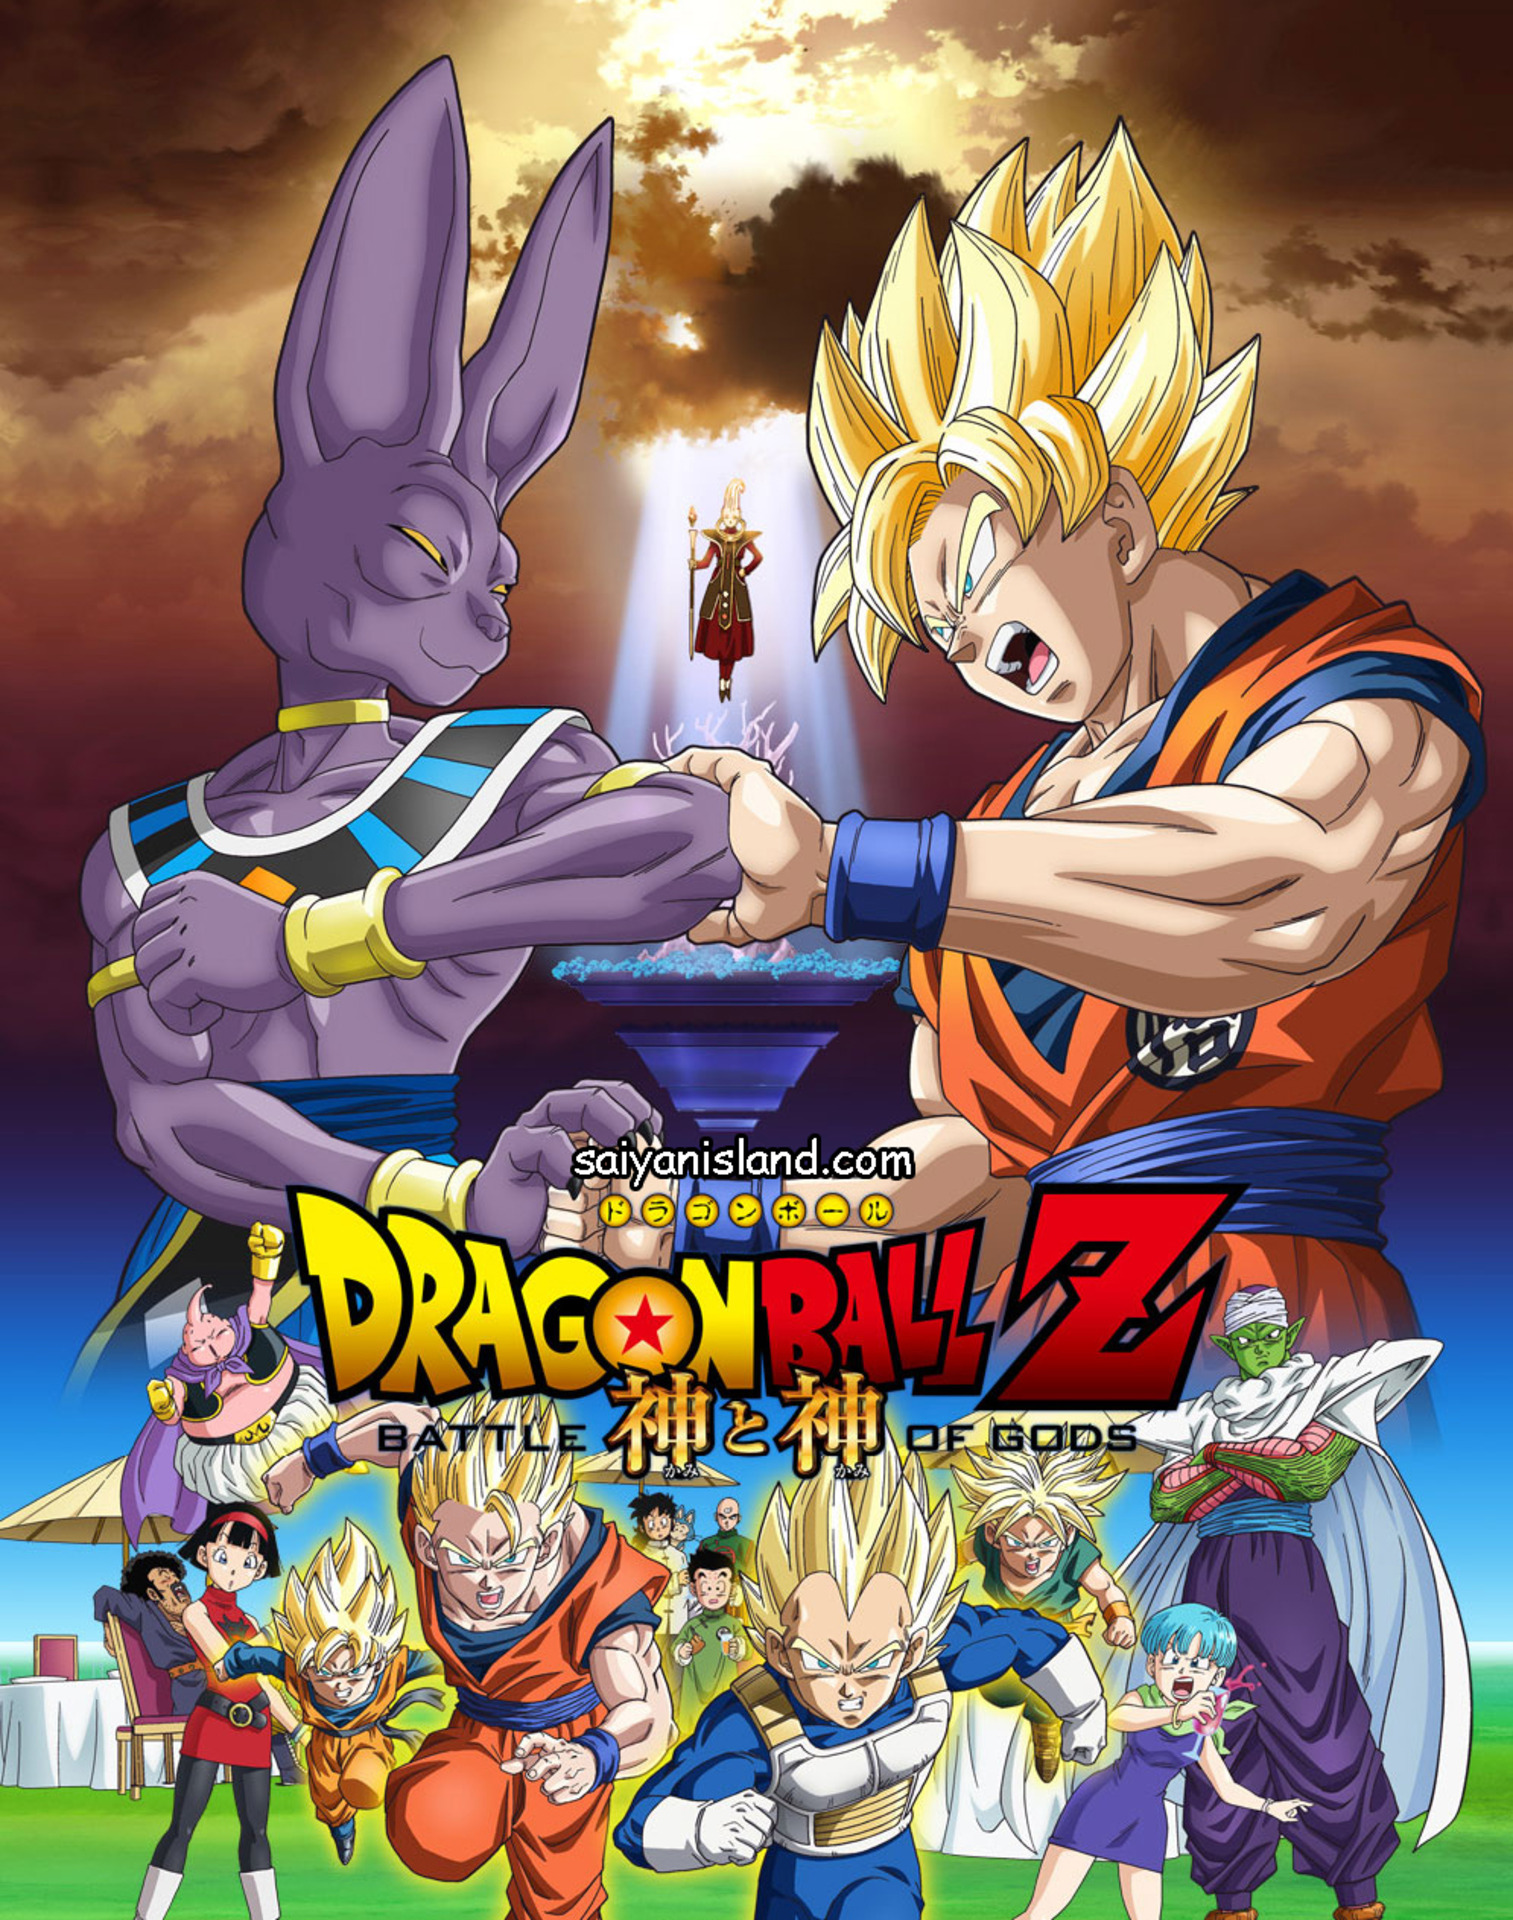 Dragon Ball Z movie 14, Japanese Anime Wiki